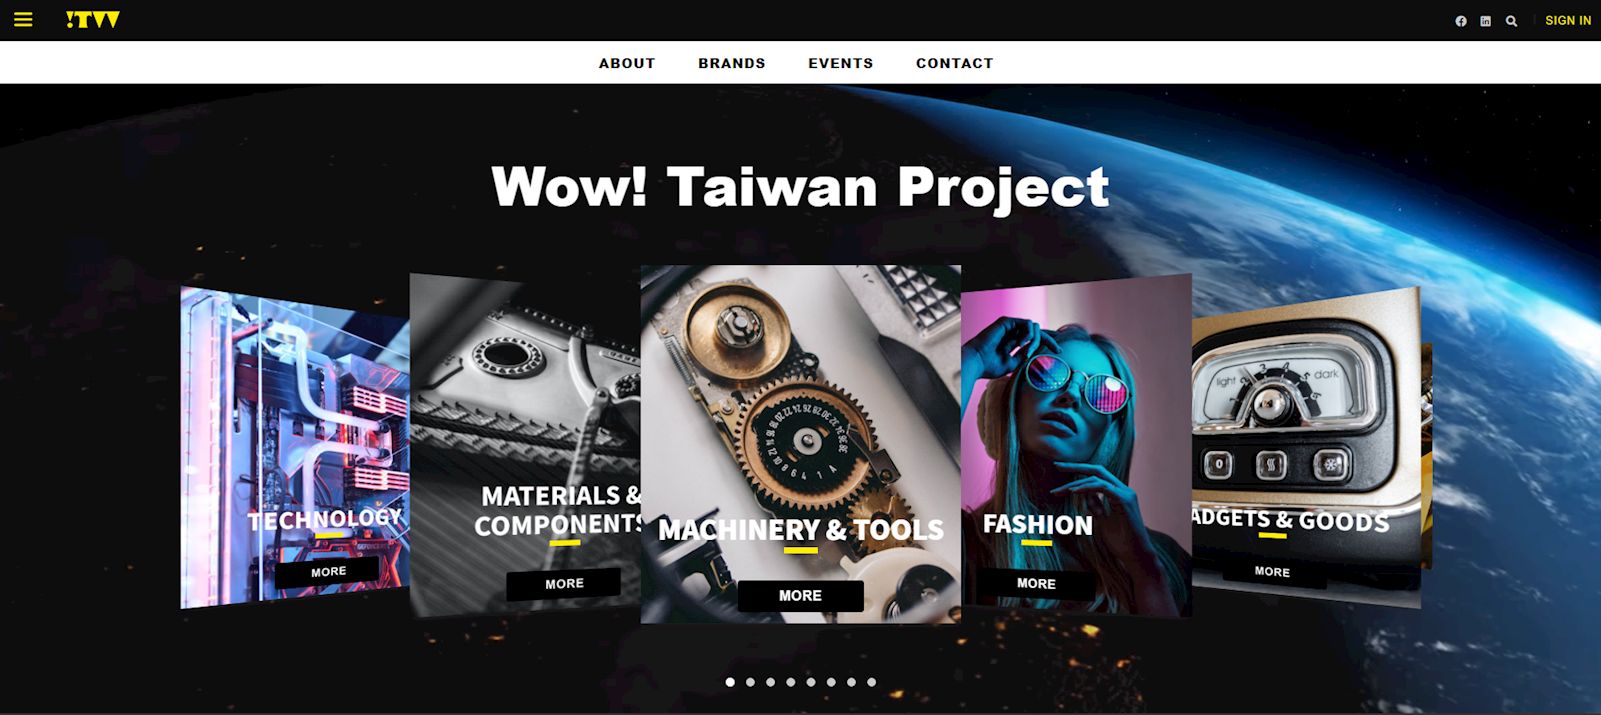 Wow! Taiwan Project